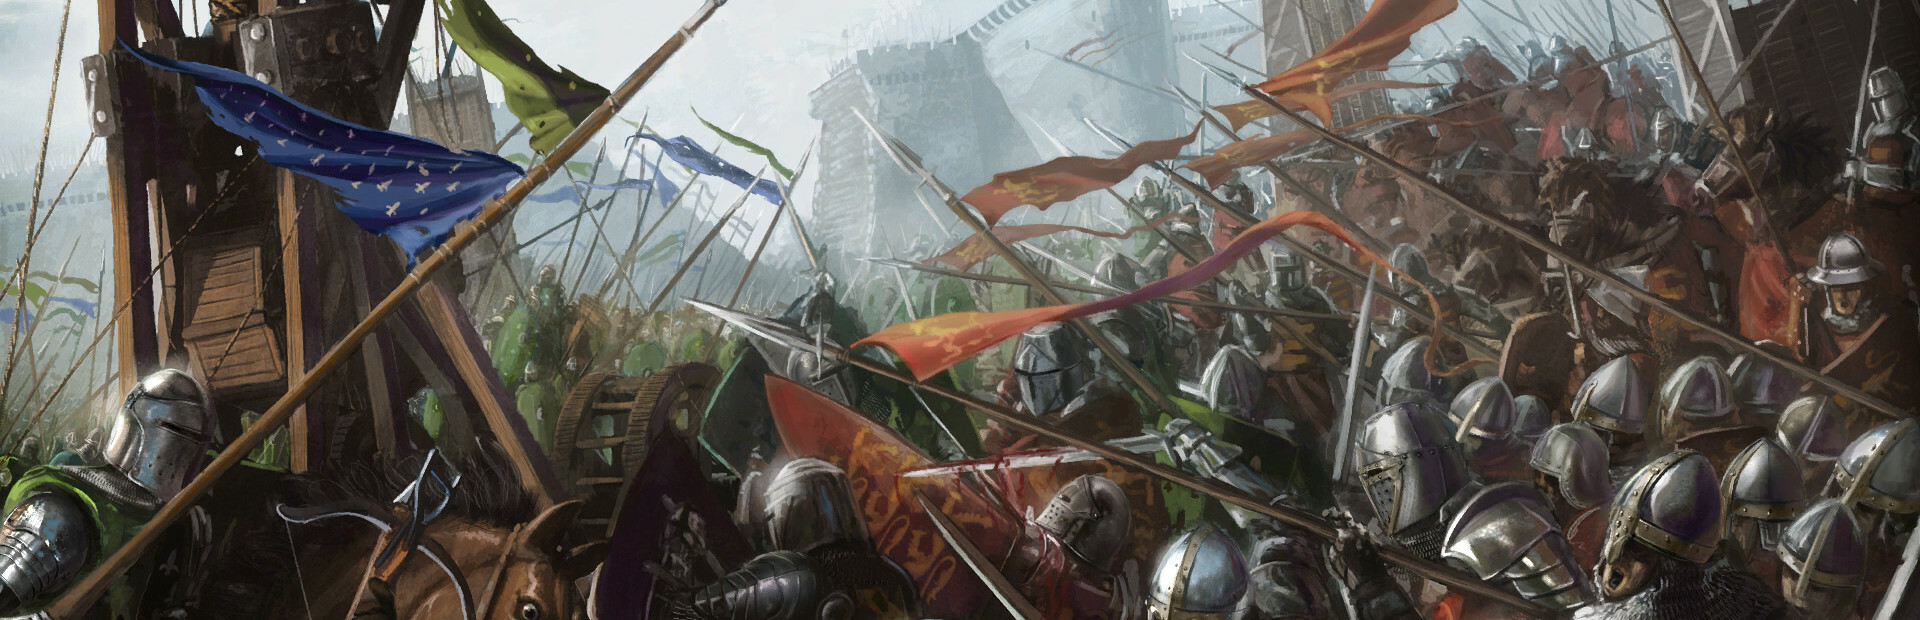 Medieval Kingdom Wars cover image